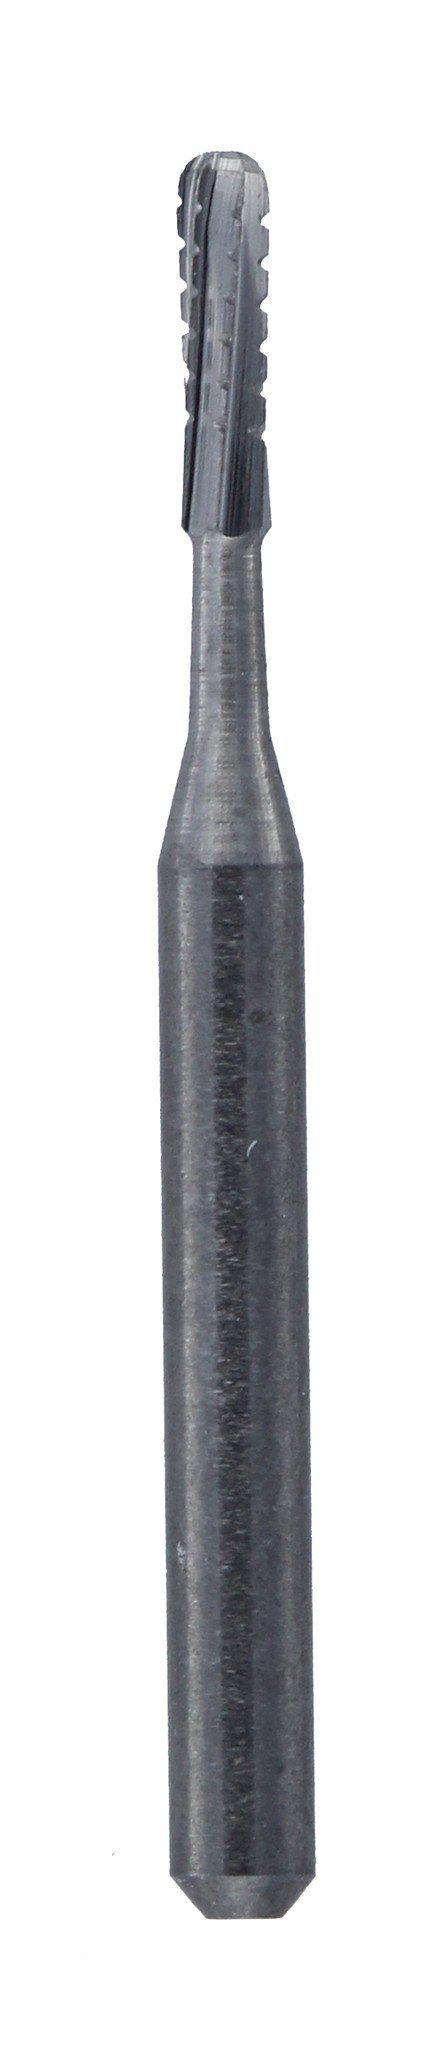 FG1557-1  Dentalree Solid Carbide 1-Piece  Made in USA